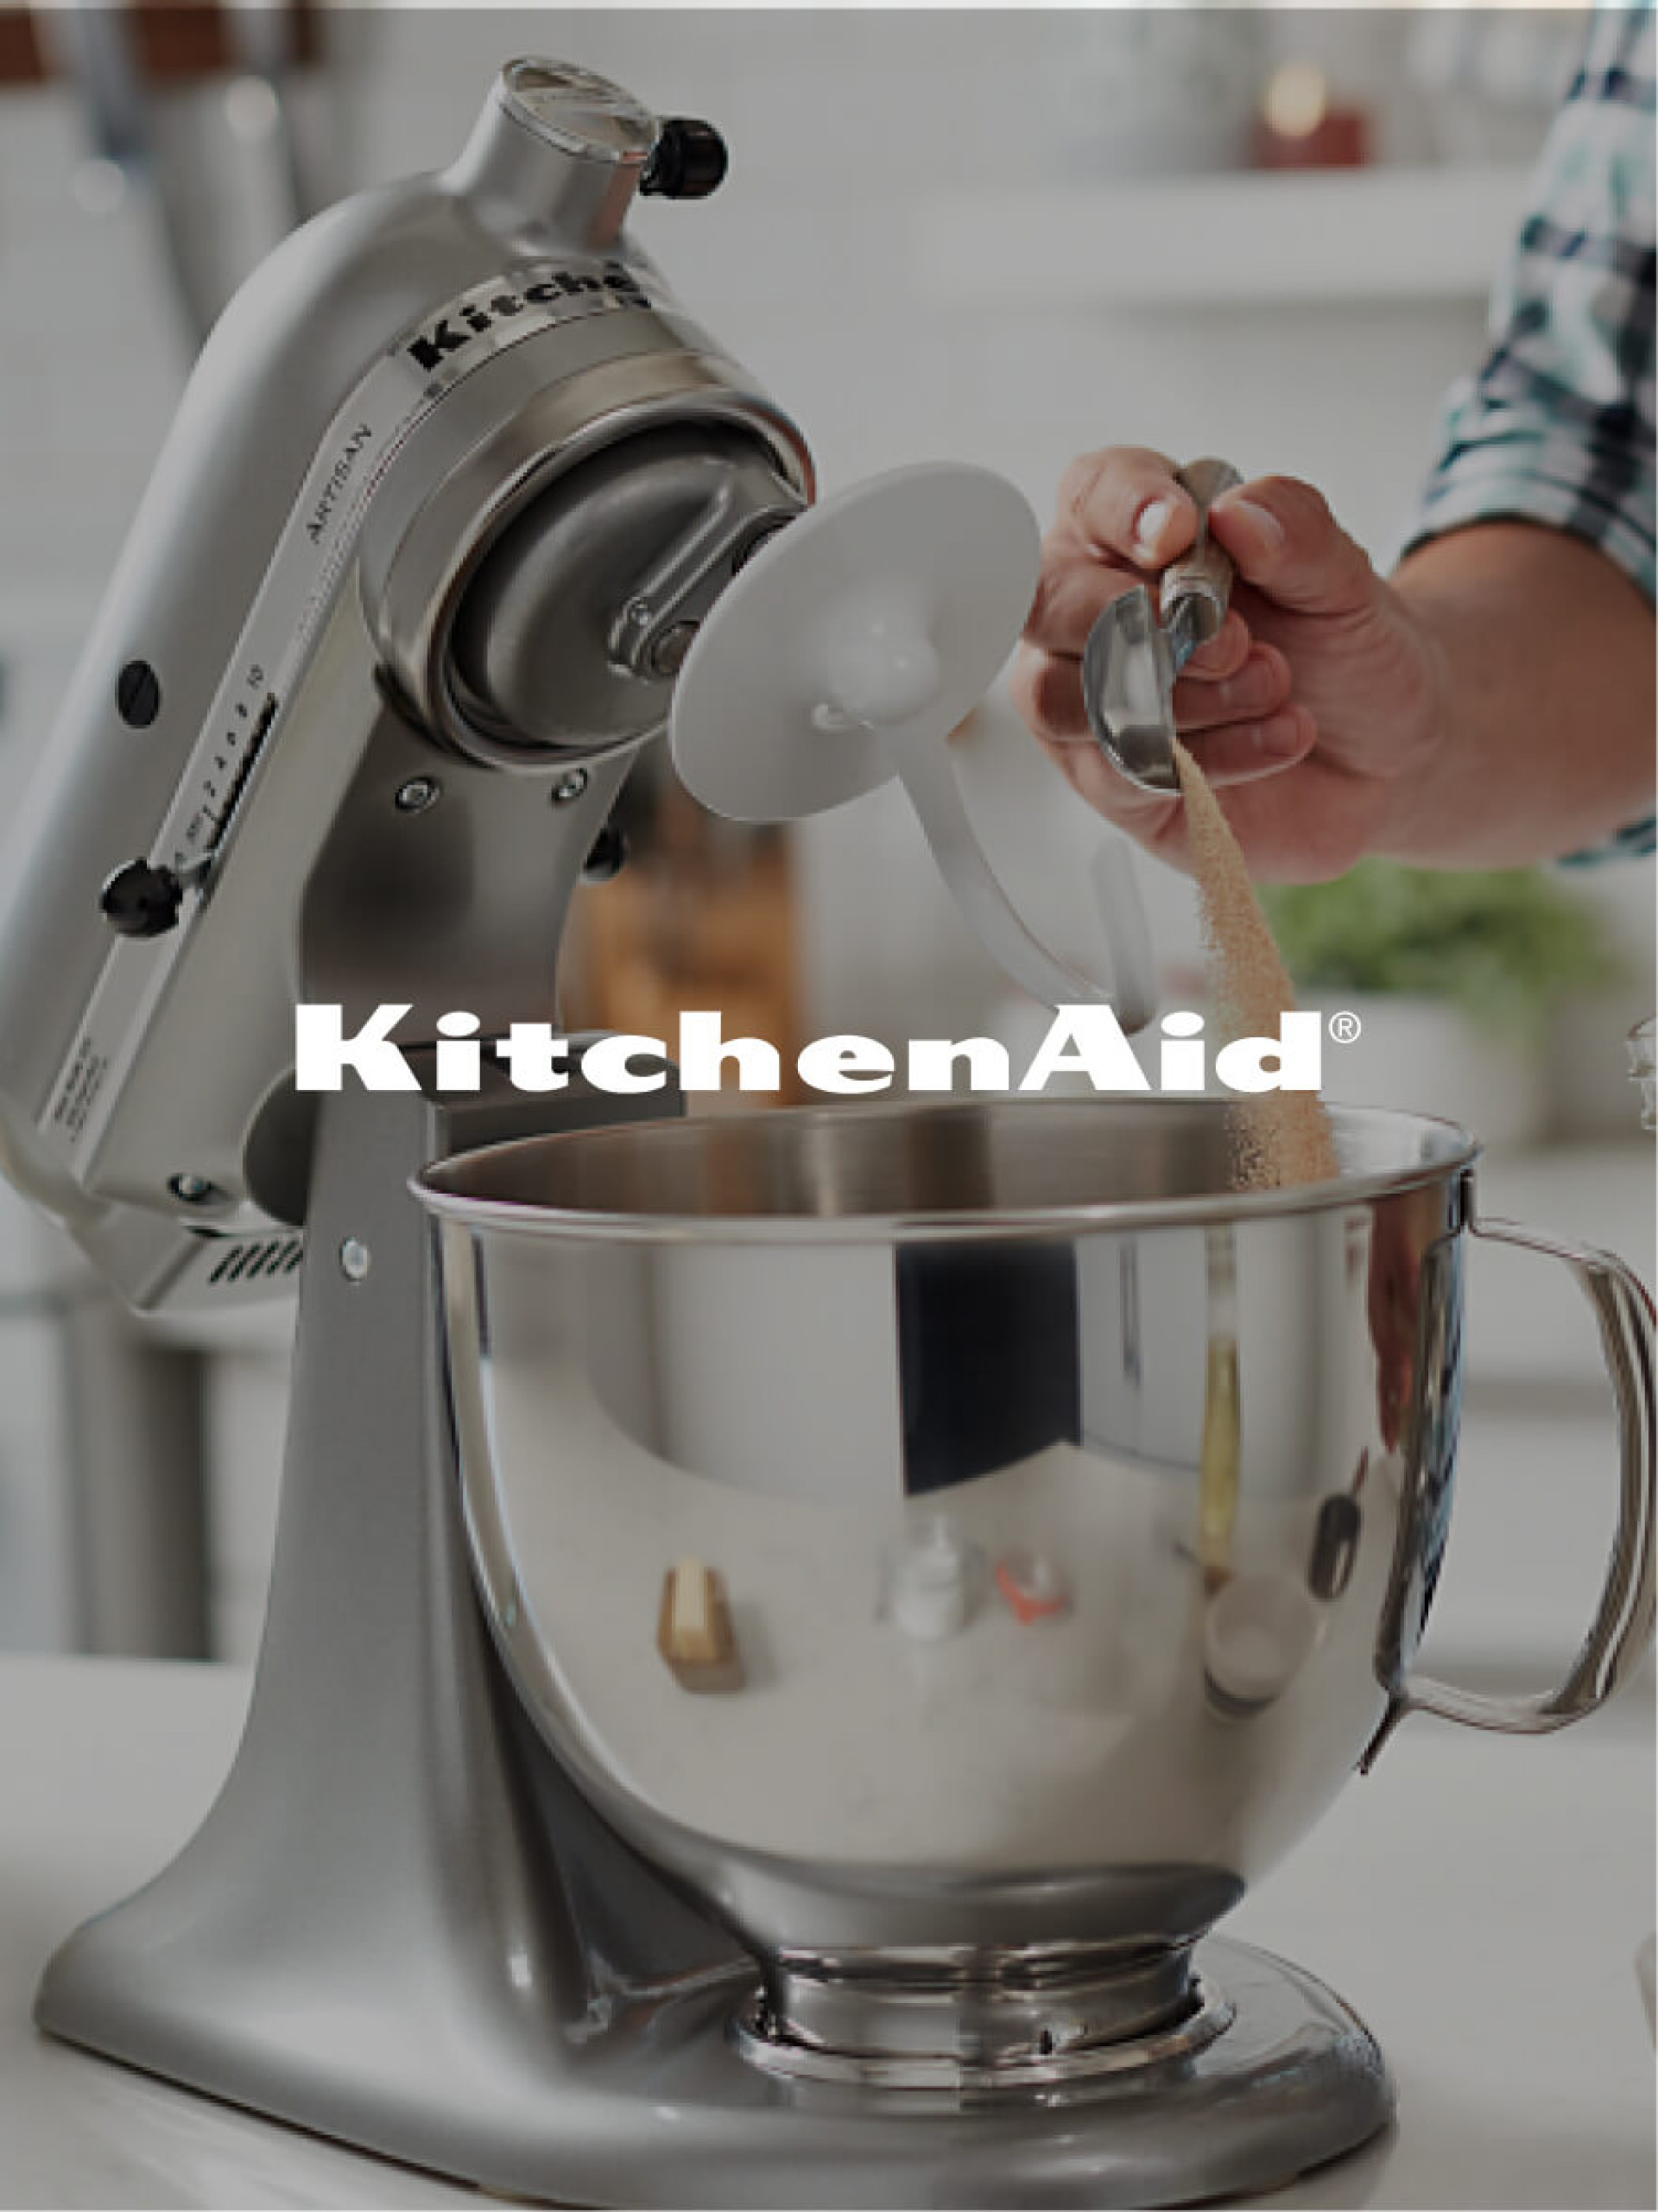 KitchenAid case study image of mixer